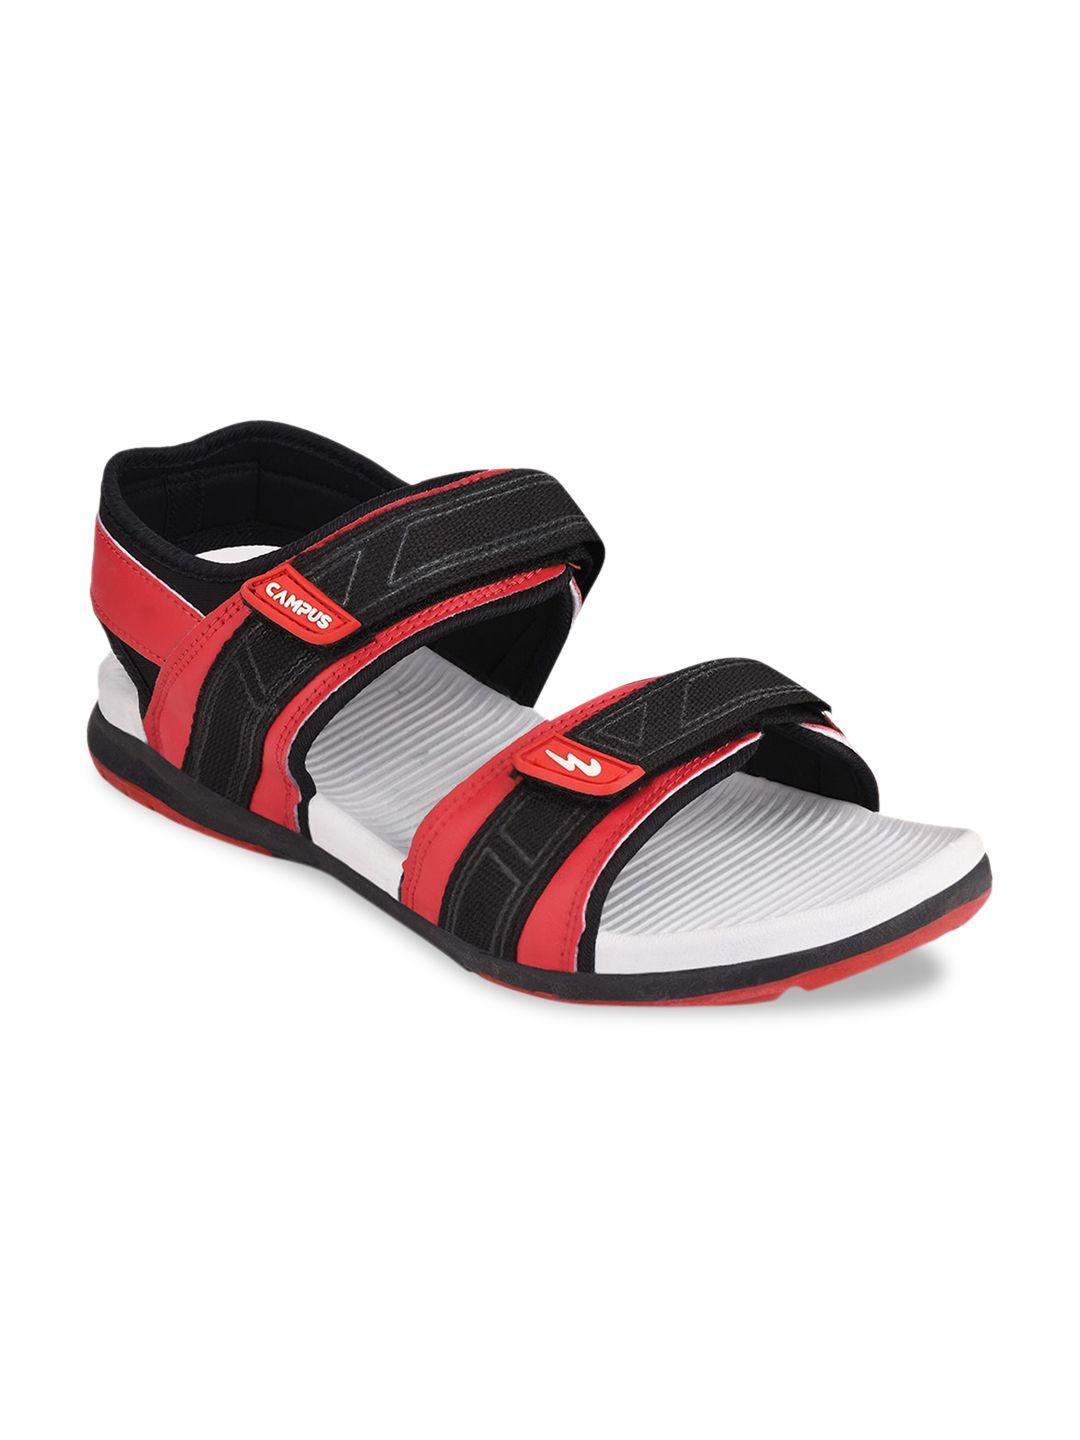 campus men red & black sports sandals